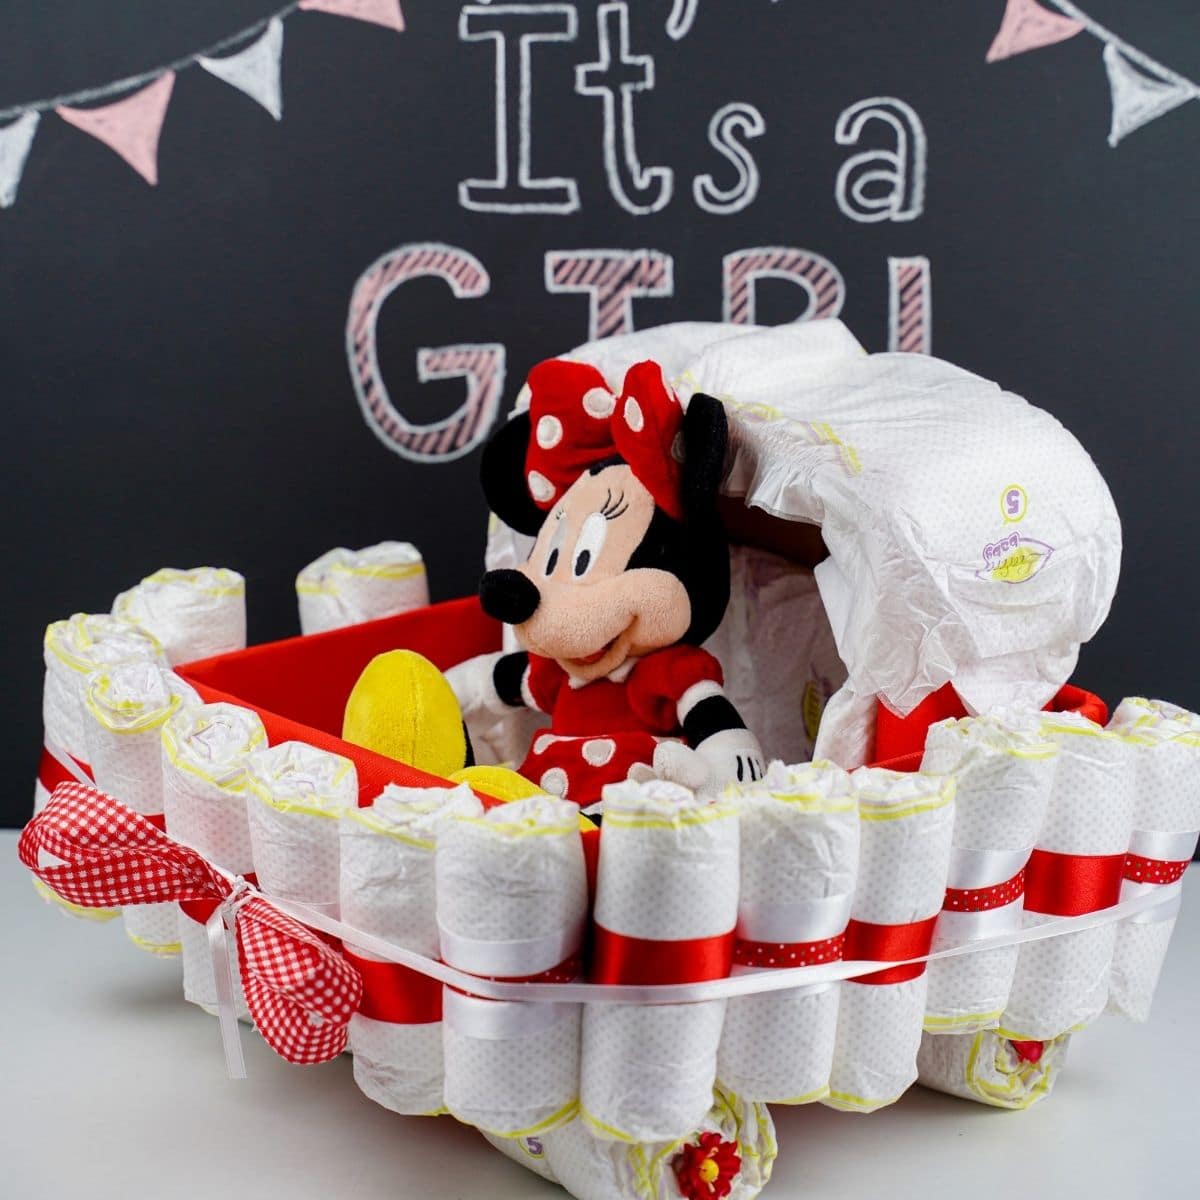 Adorable Diaper Cake Bassinet Baby Shower Gift - DIY & Crafts